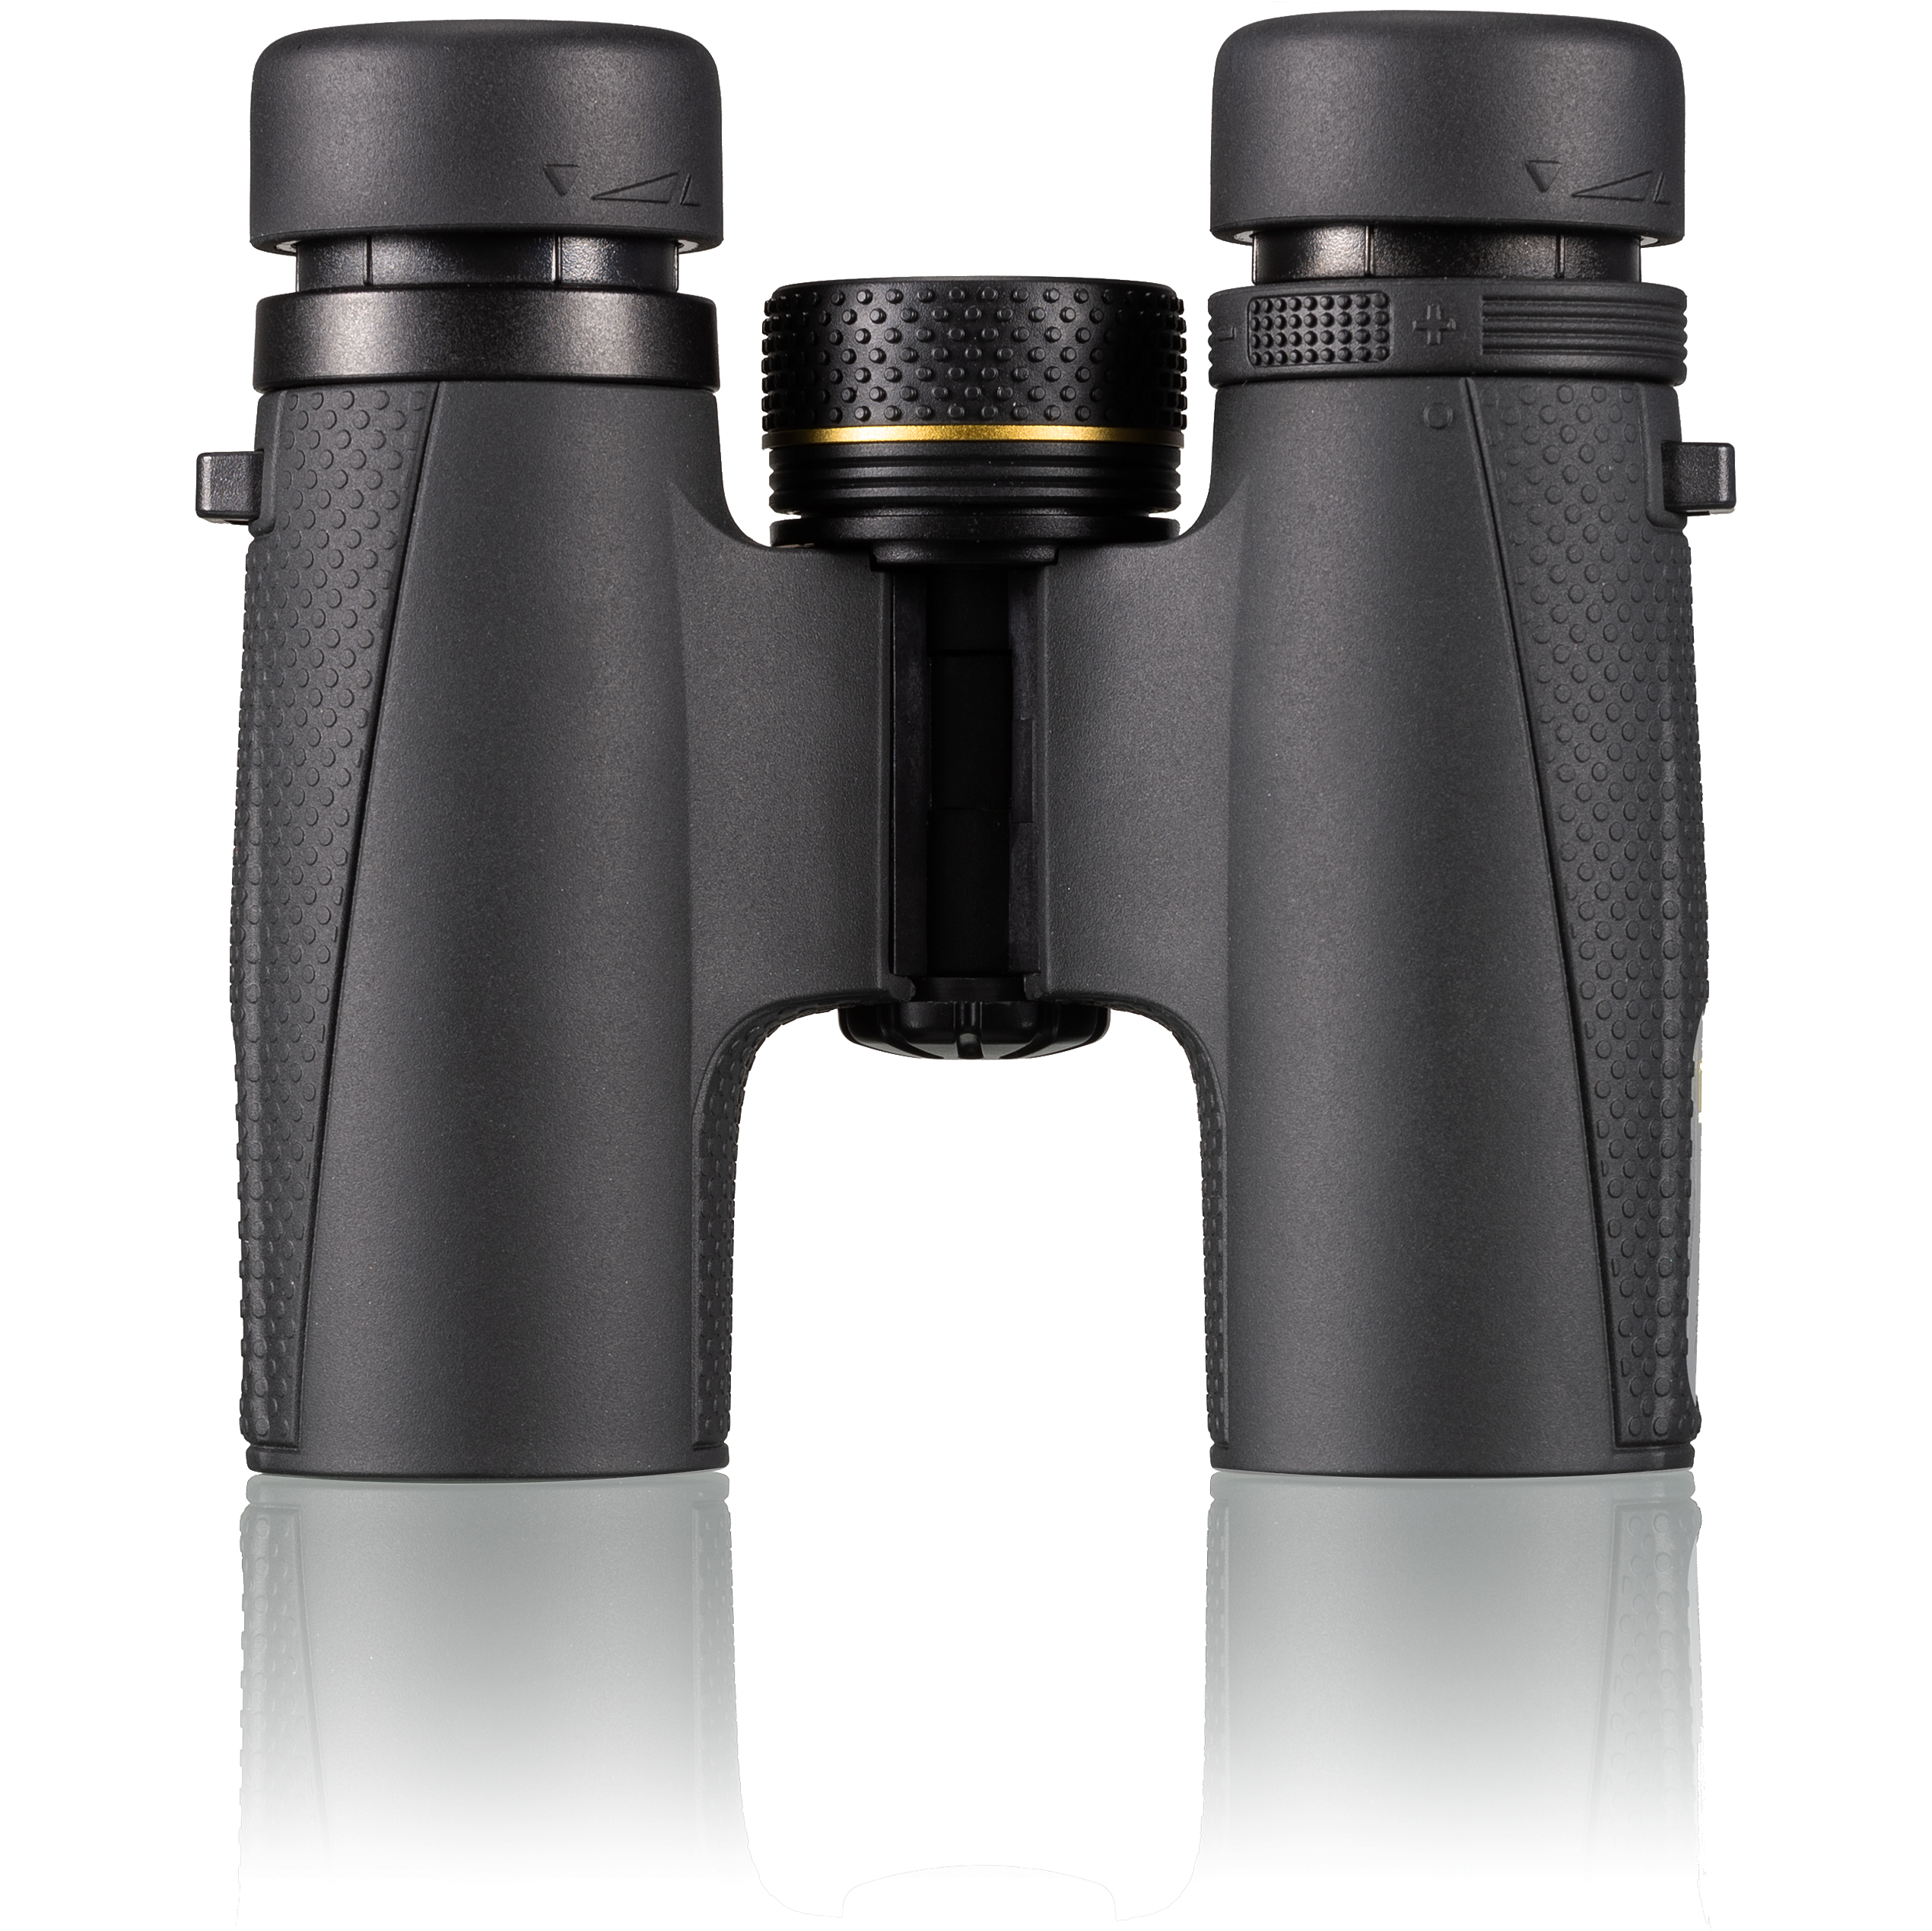 NATIONAL GEOGRAPHIC 8x25 compact binoculars waterproof